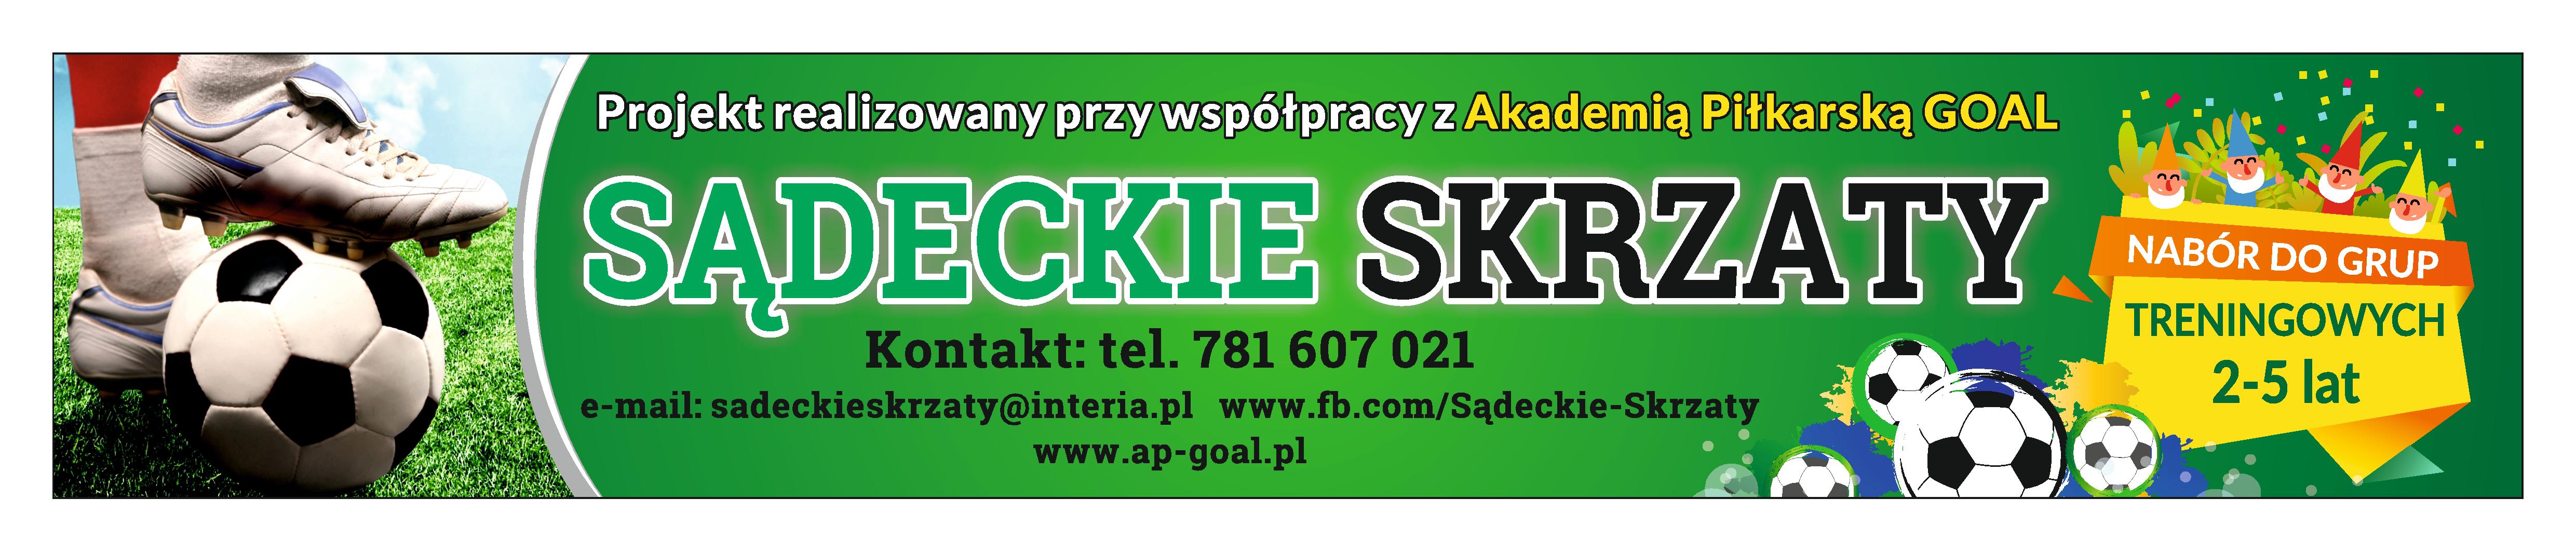 s-deckie-skrzaty-akademia-pi-karska-goal